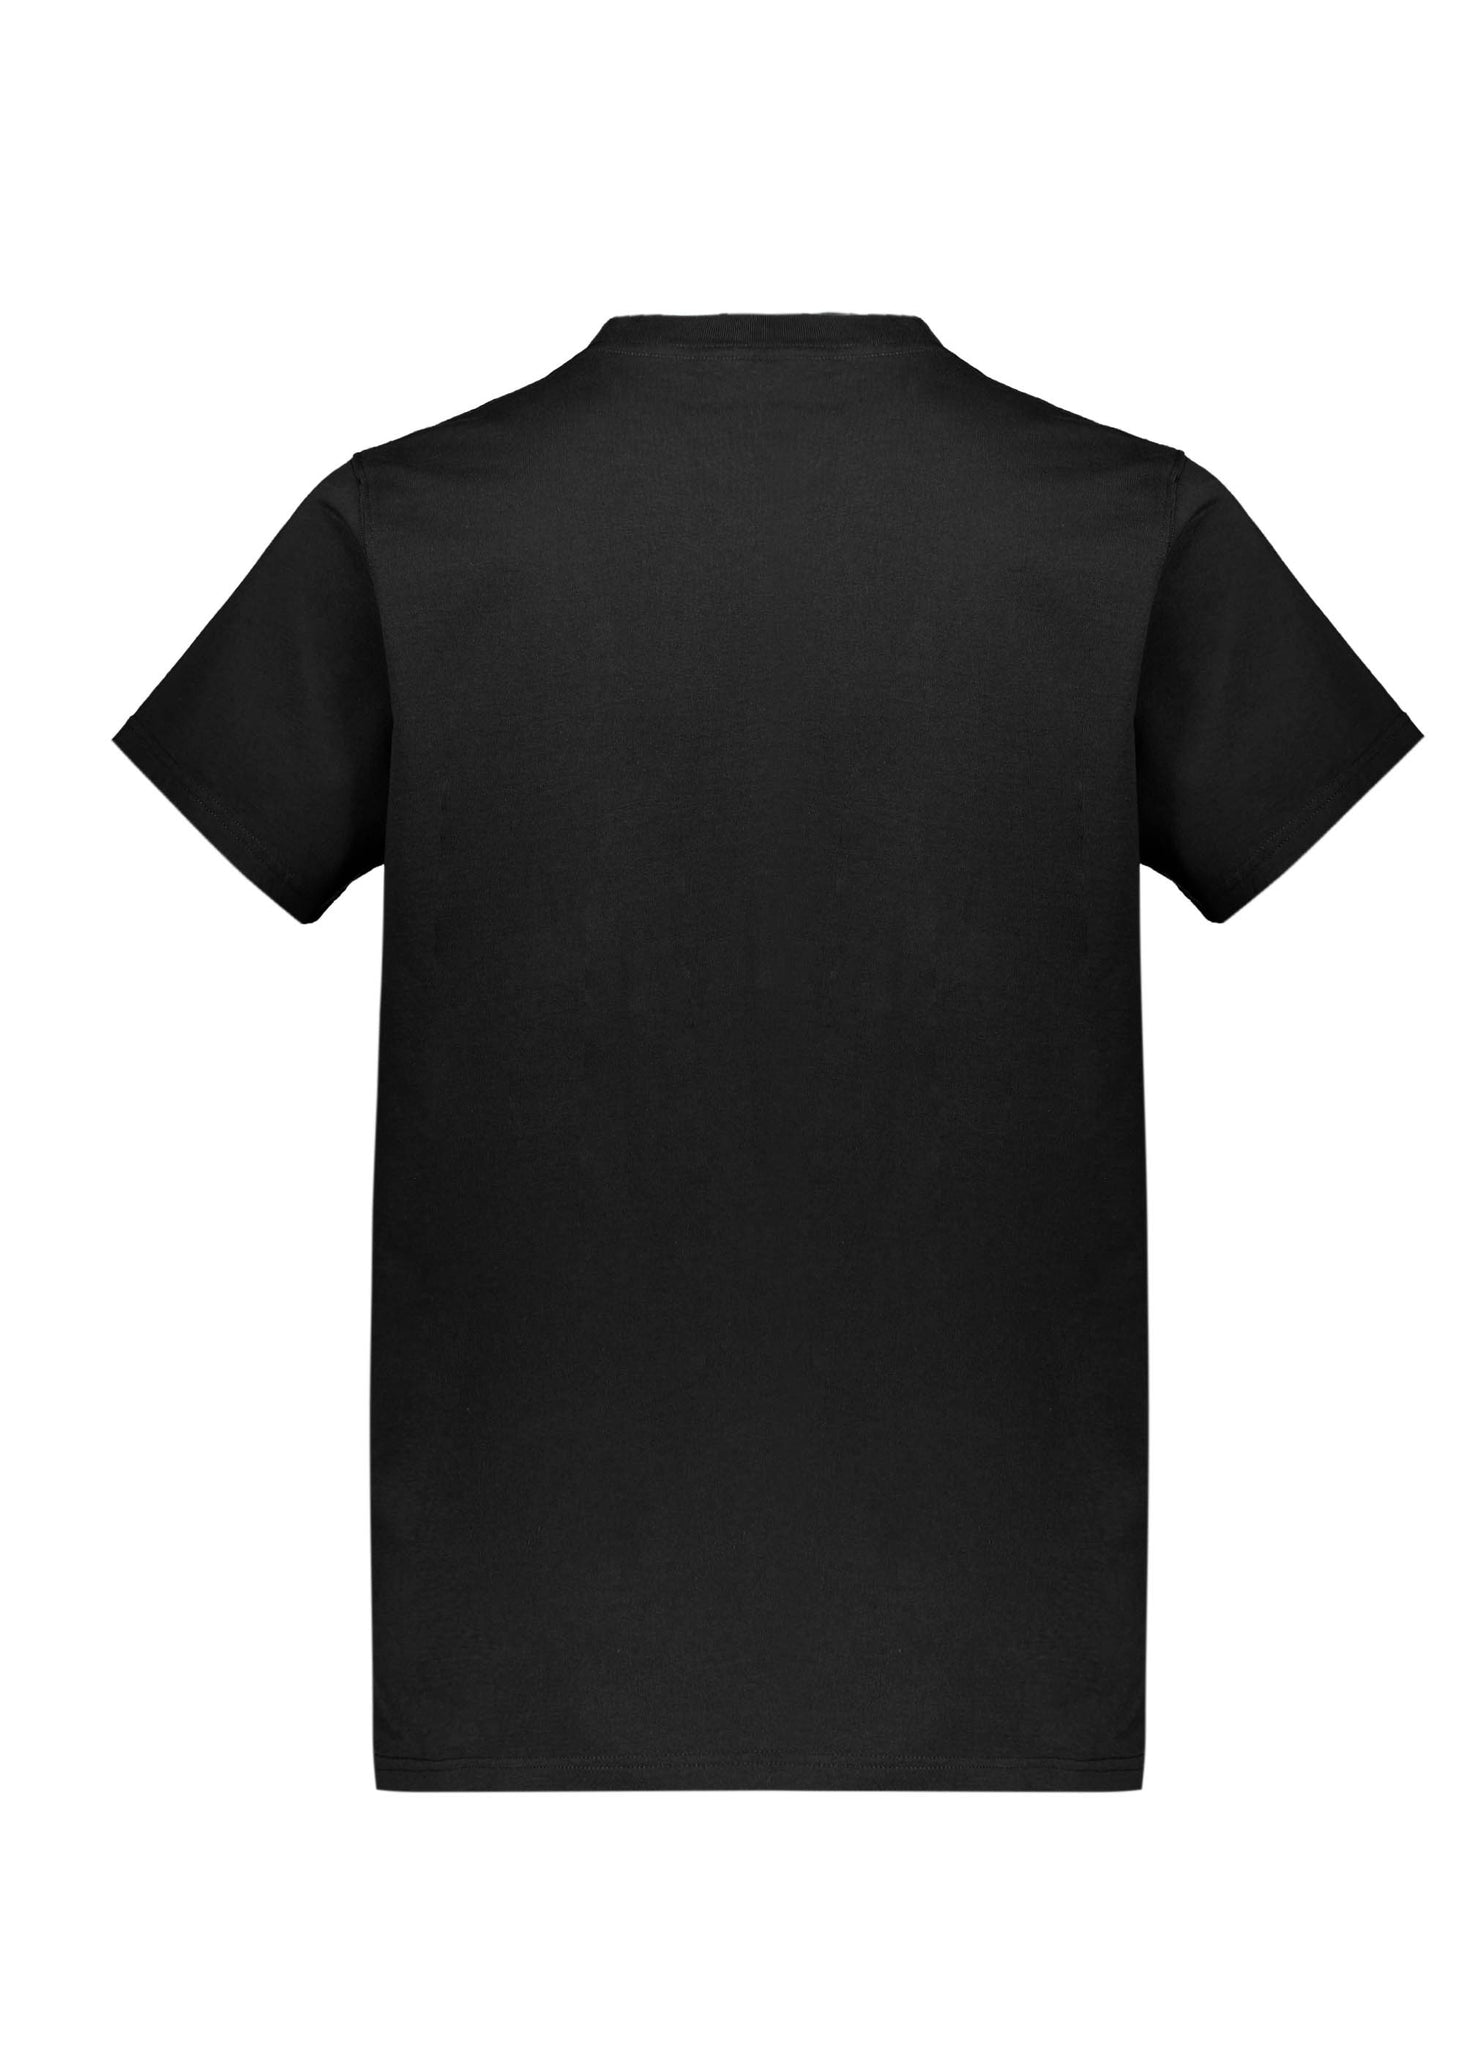 Maharishi Warhol Camo Print T-Shirt - Black